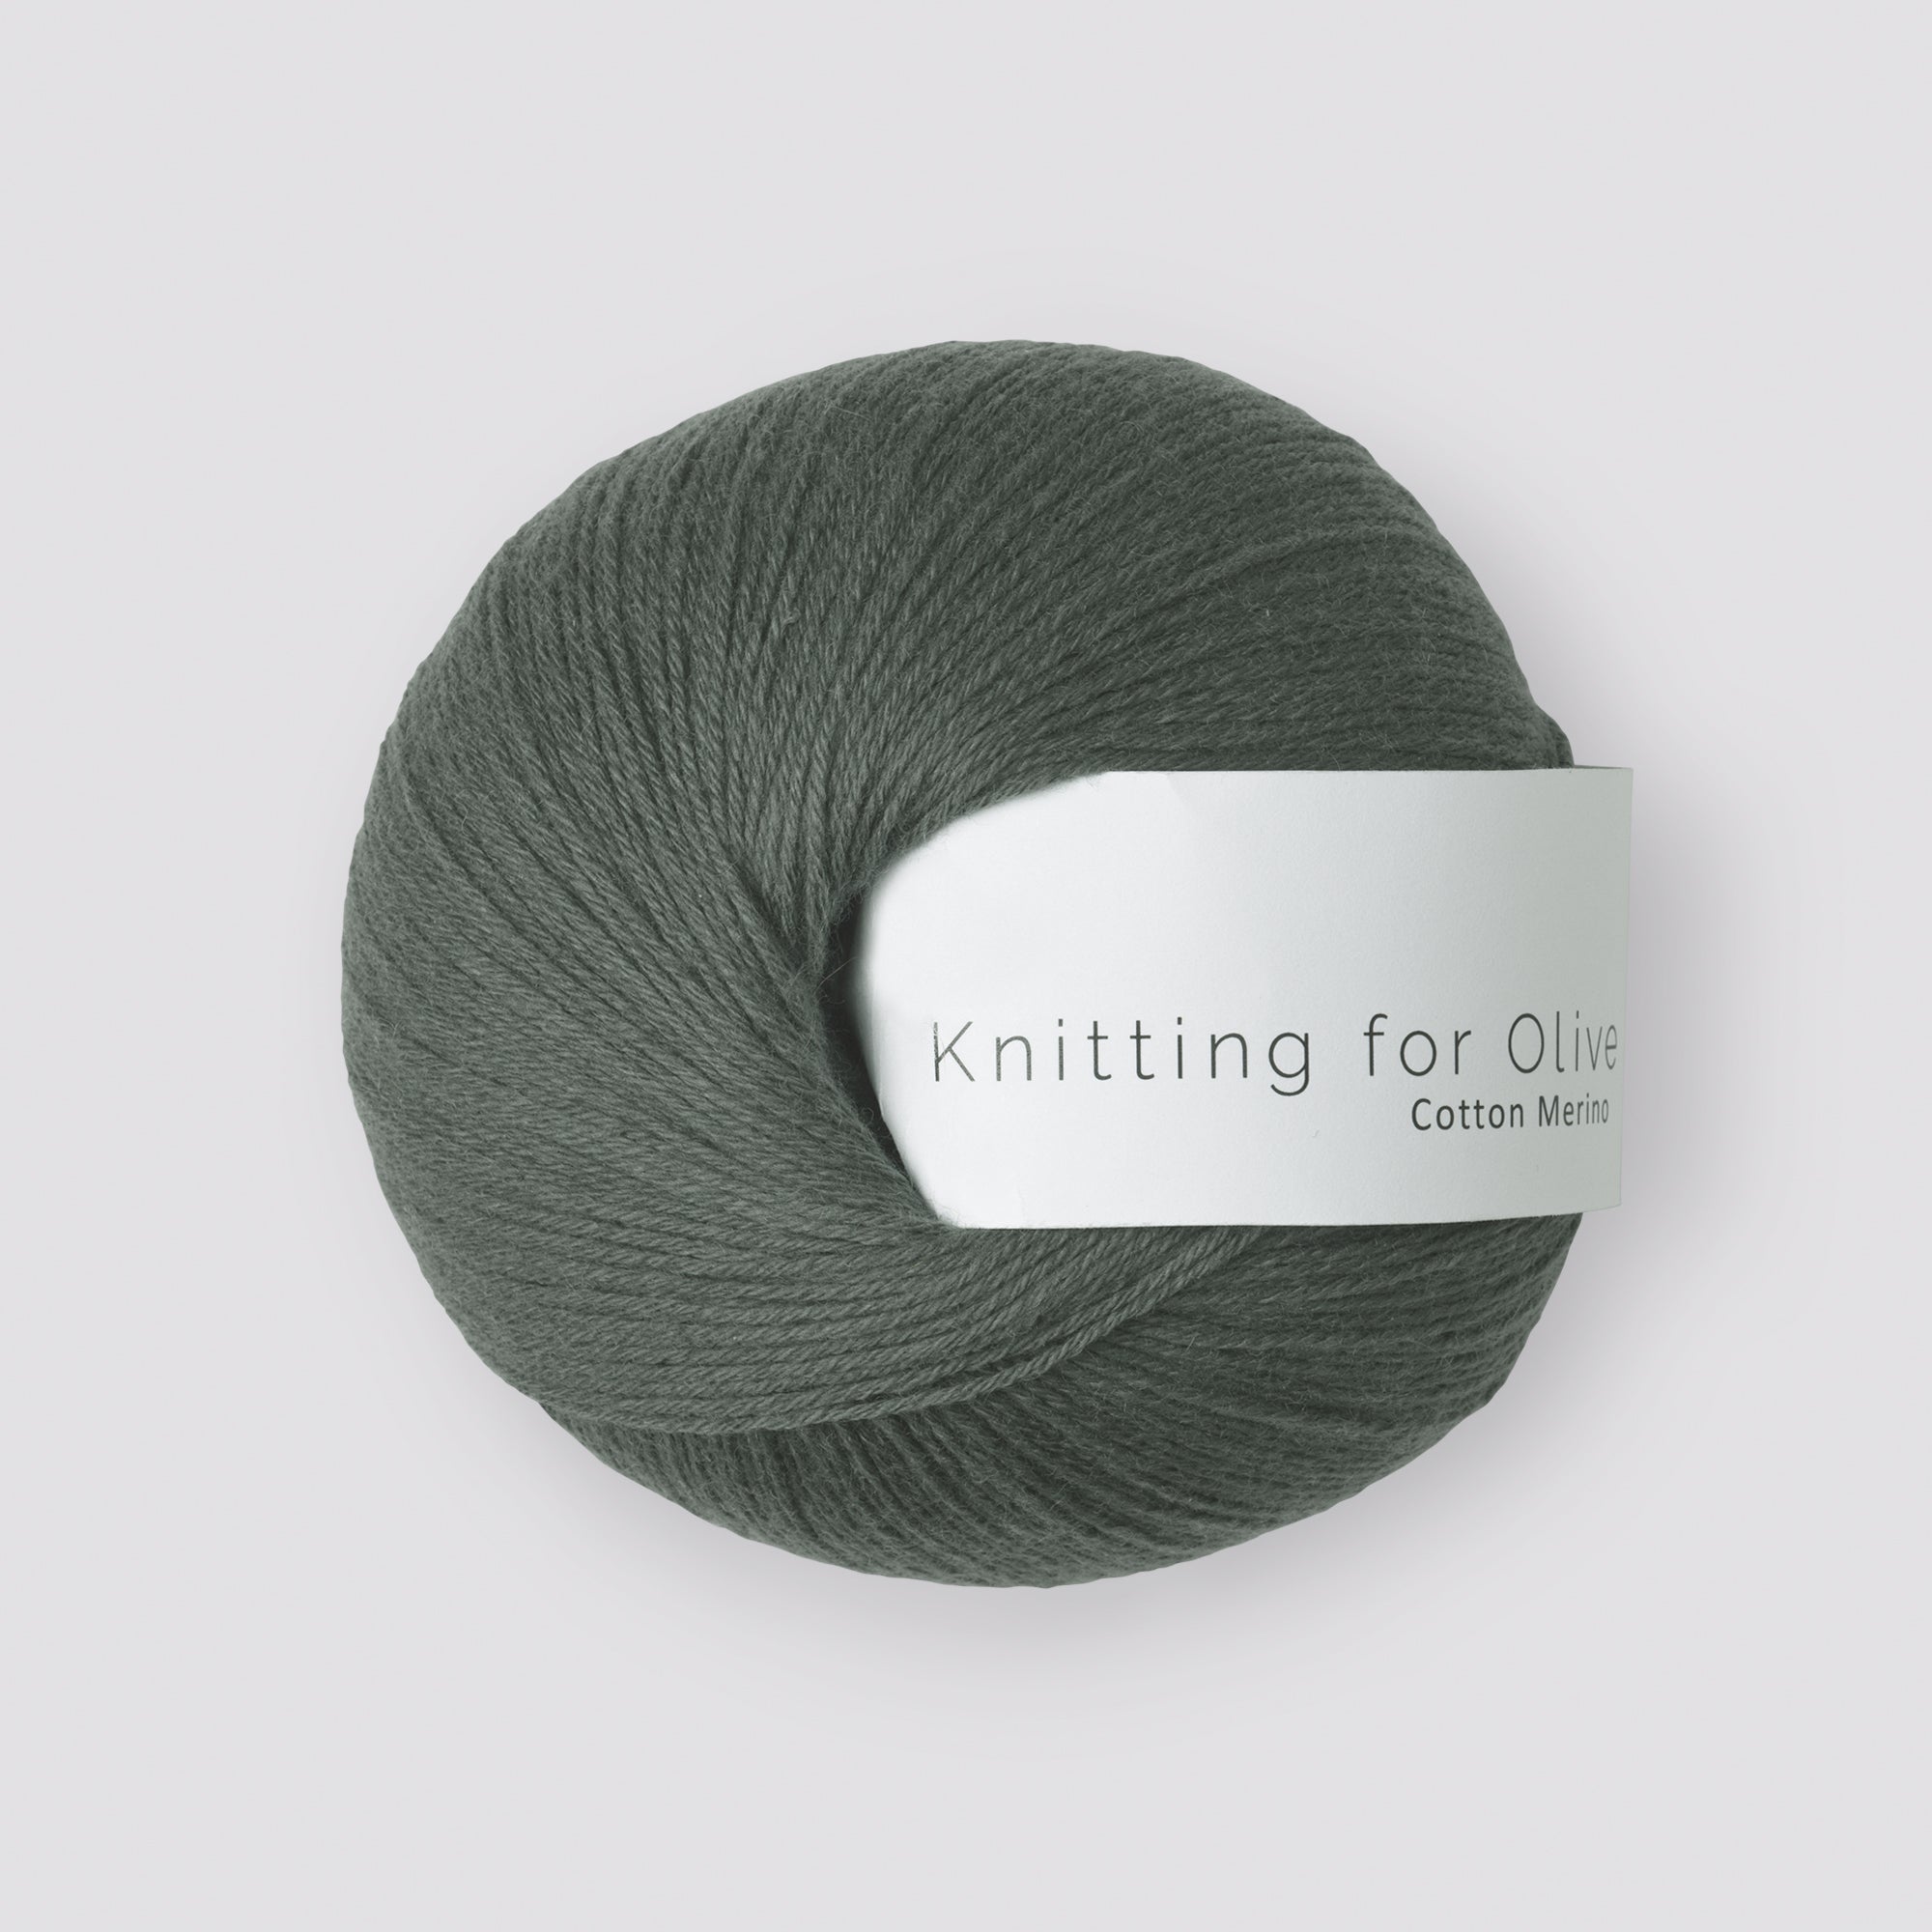 Knitting for Olive Cotton Merino - Dark Sea Green